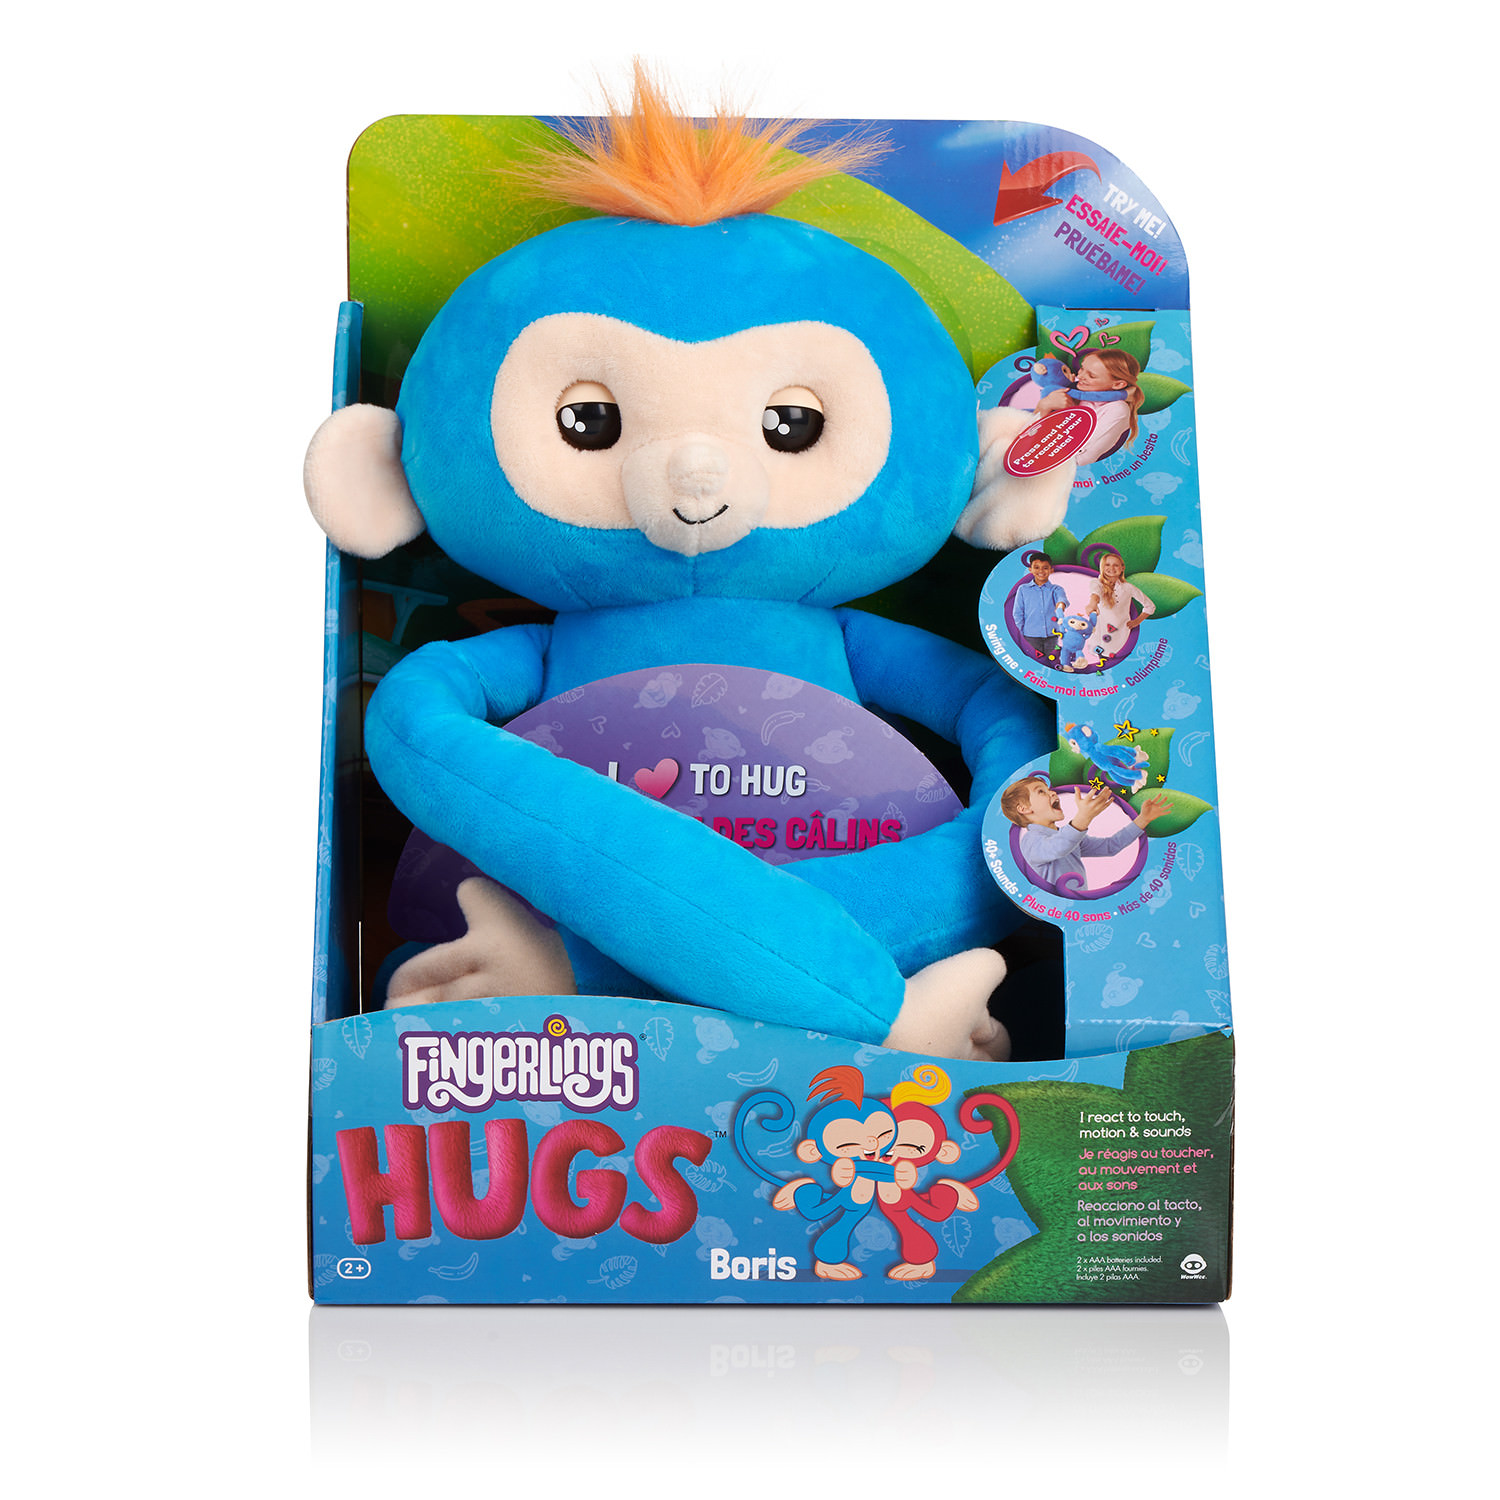 Fingerlings HUGS - Boris (Blue) - Advanced Interactive Plush Baby Monkey Pet - by WowWee - image 5 of 14